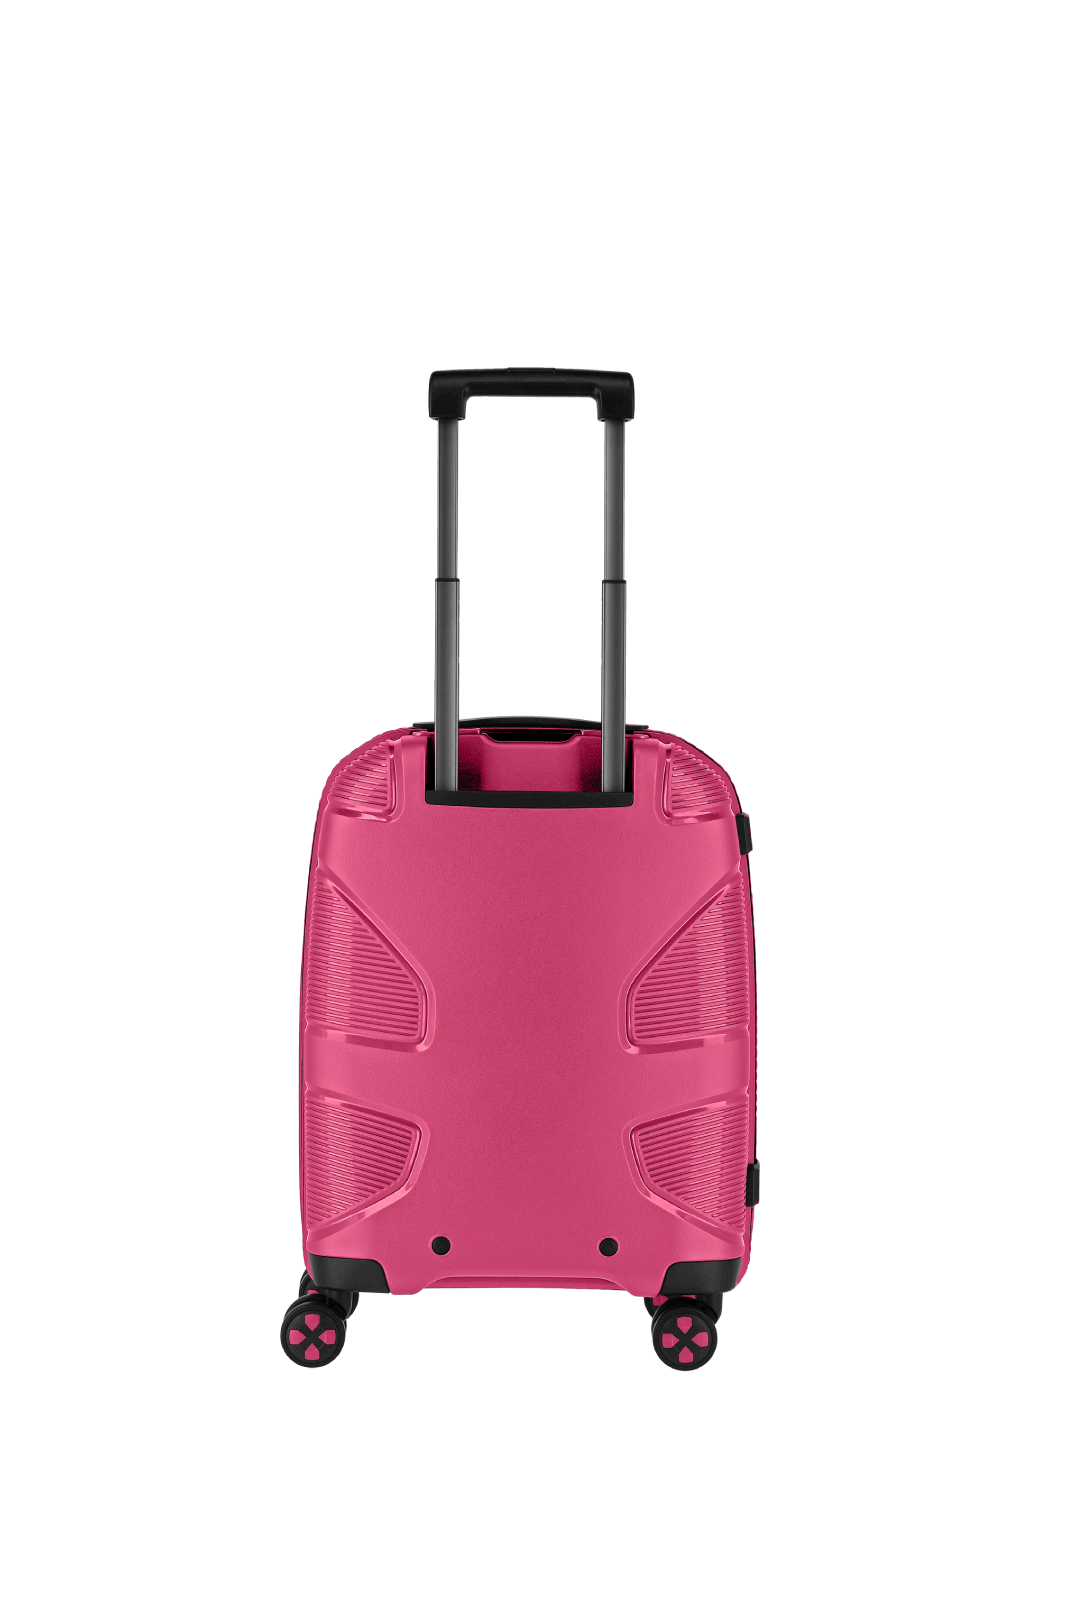 Impackt Koffer IP1 S Flora Pink